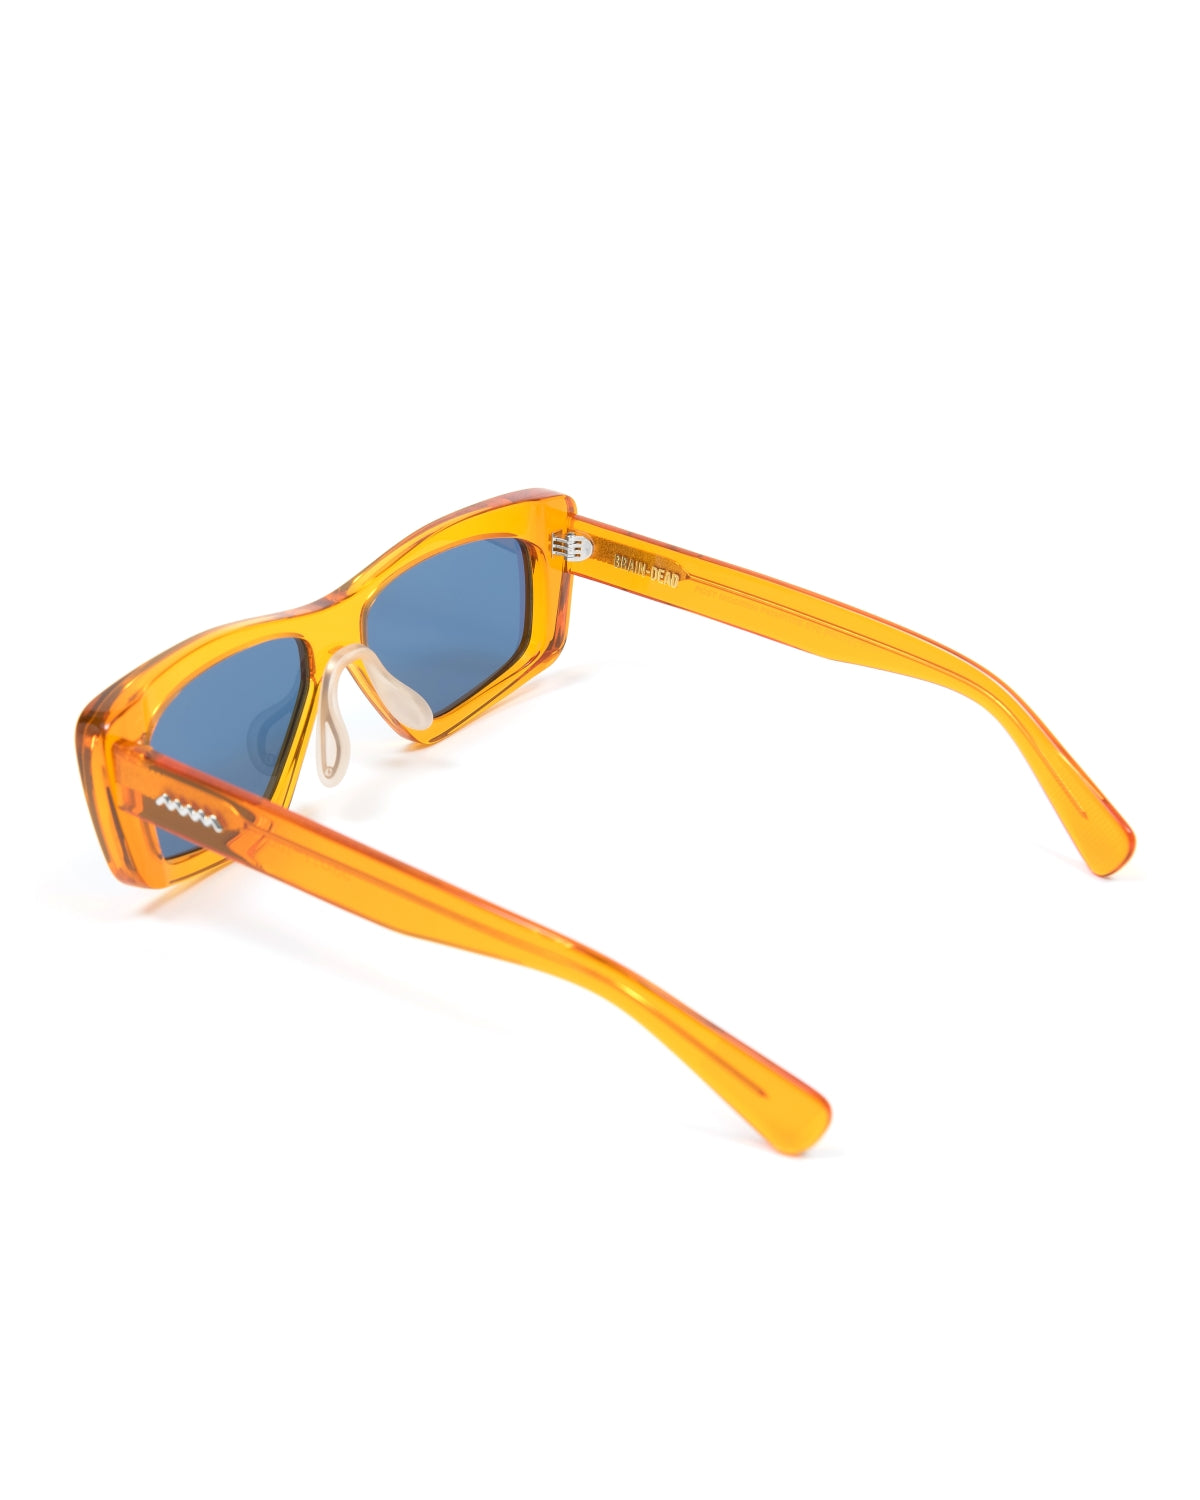 Kopelman Post Modern Primitive Eye Protection - Orange/Blue 2